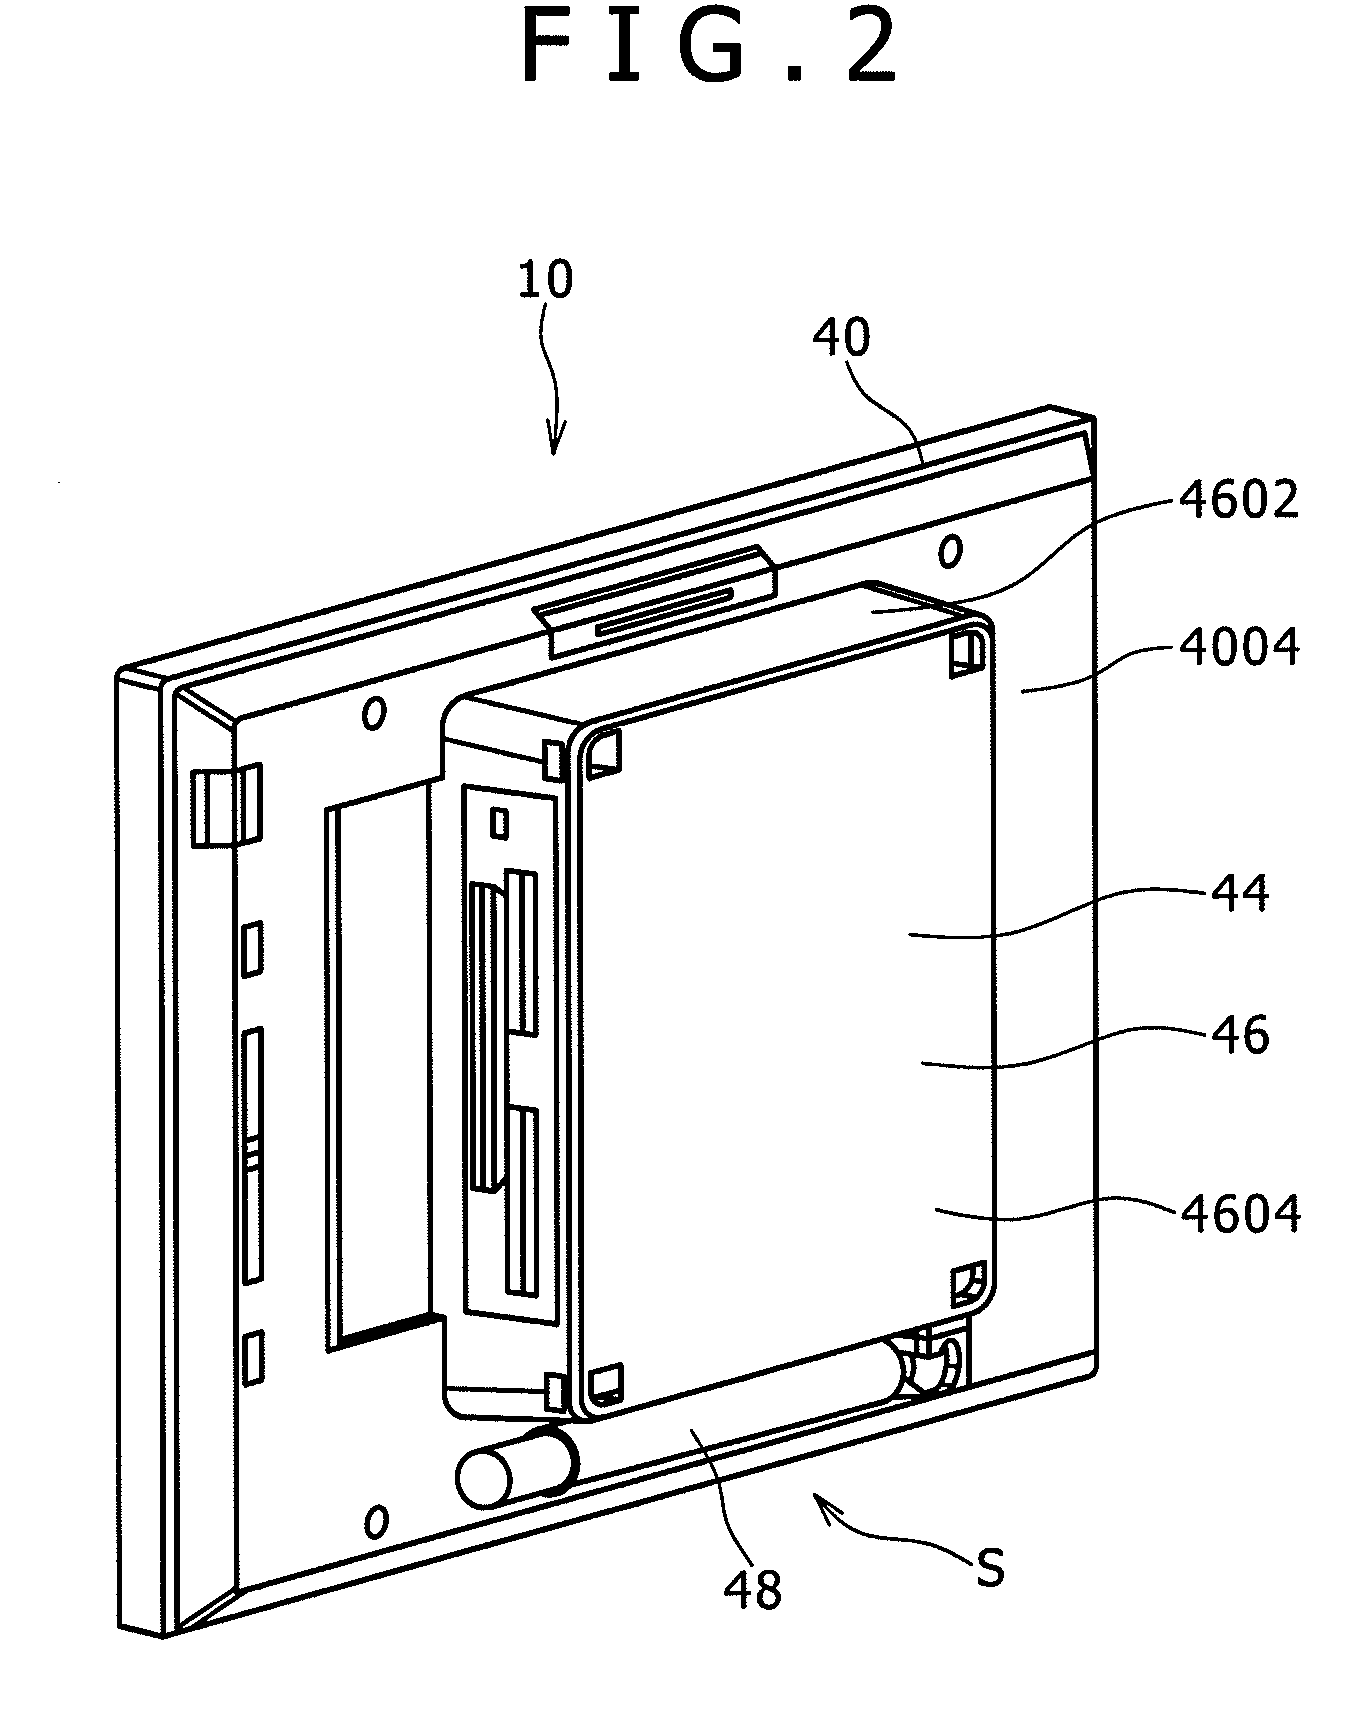 Image display apparatus